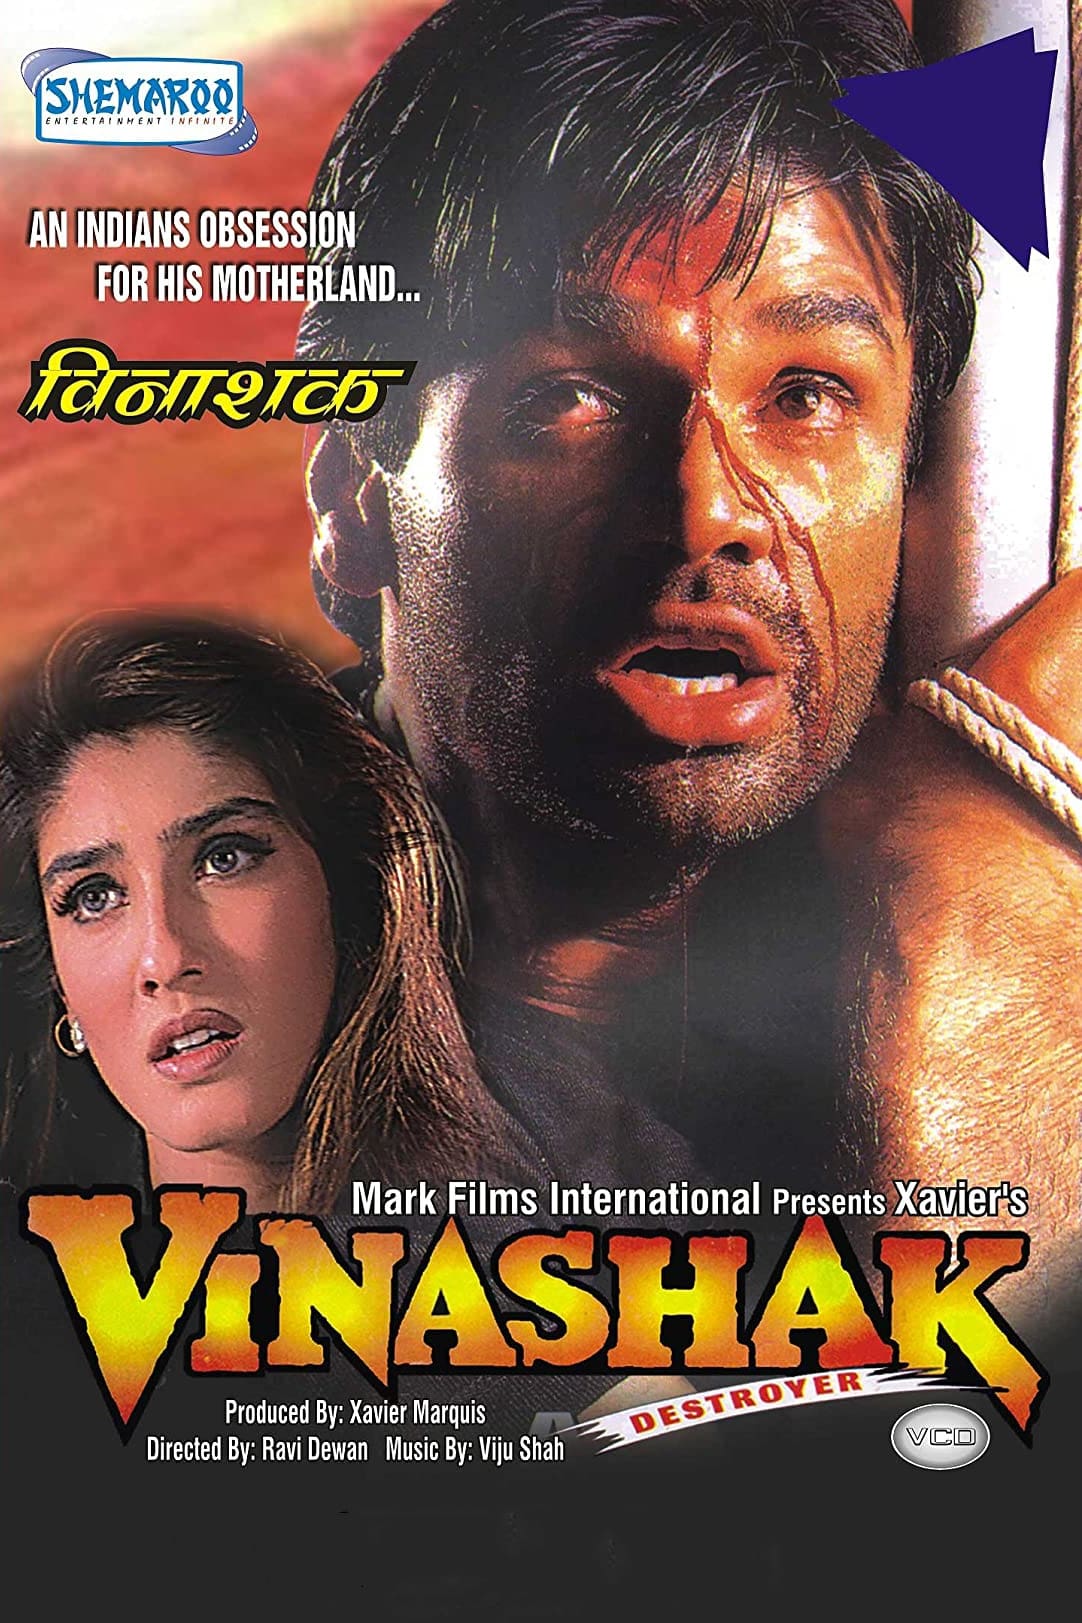 Vinashak - Destroyer on FREECABLE TV